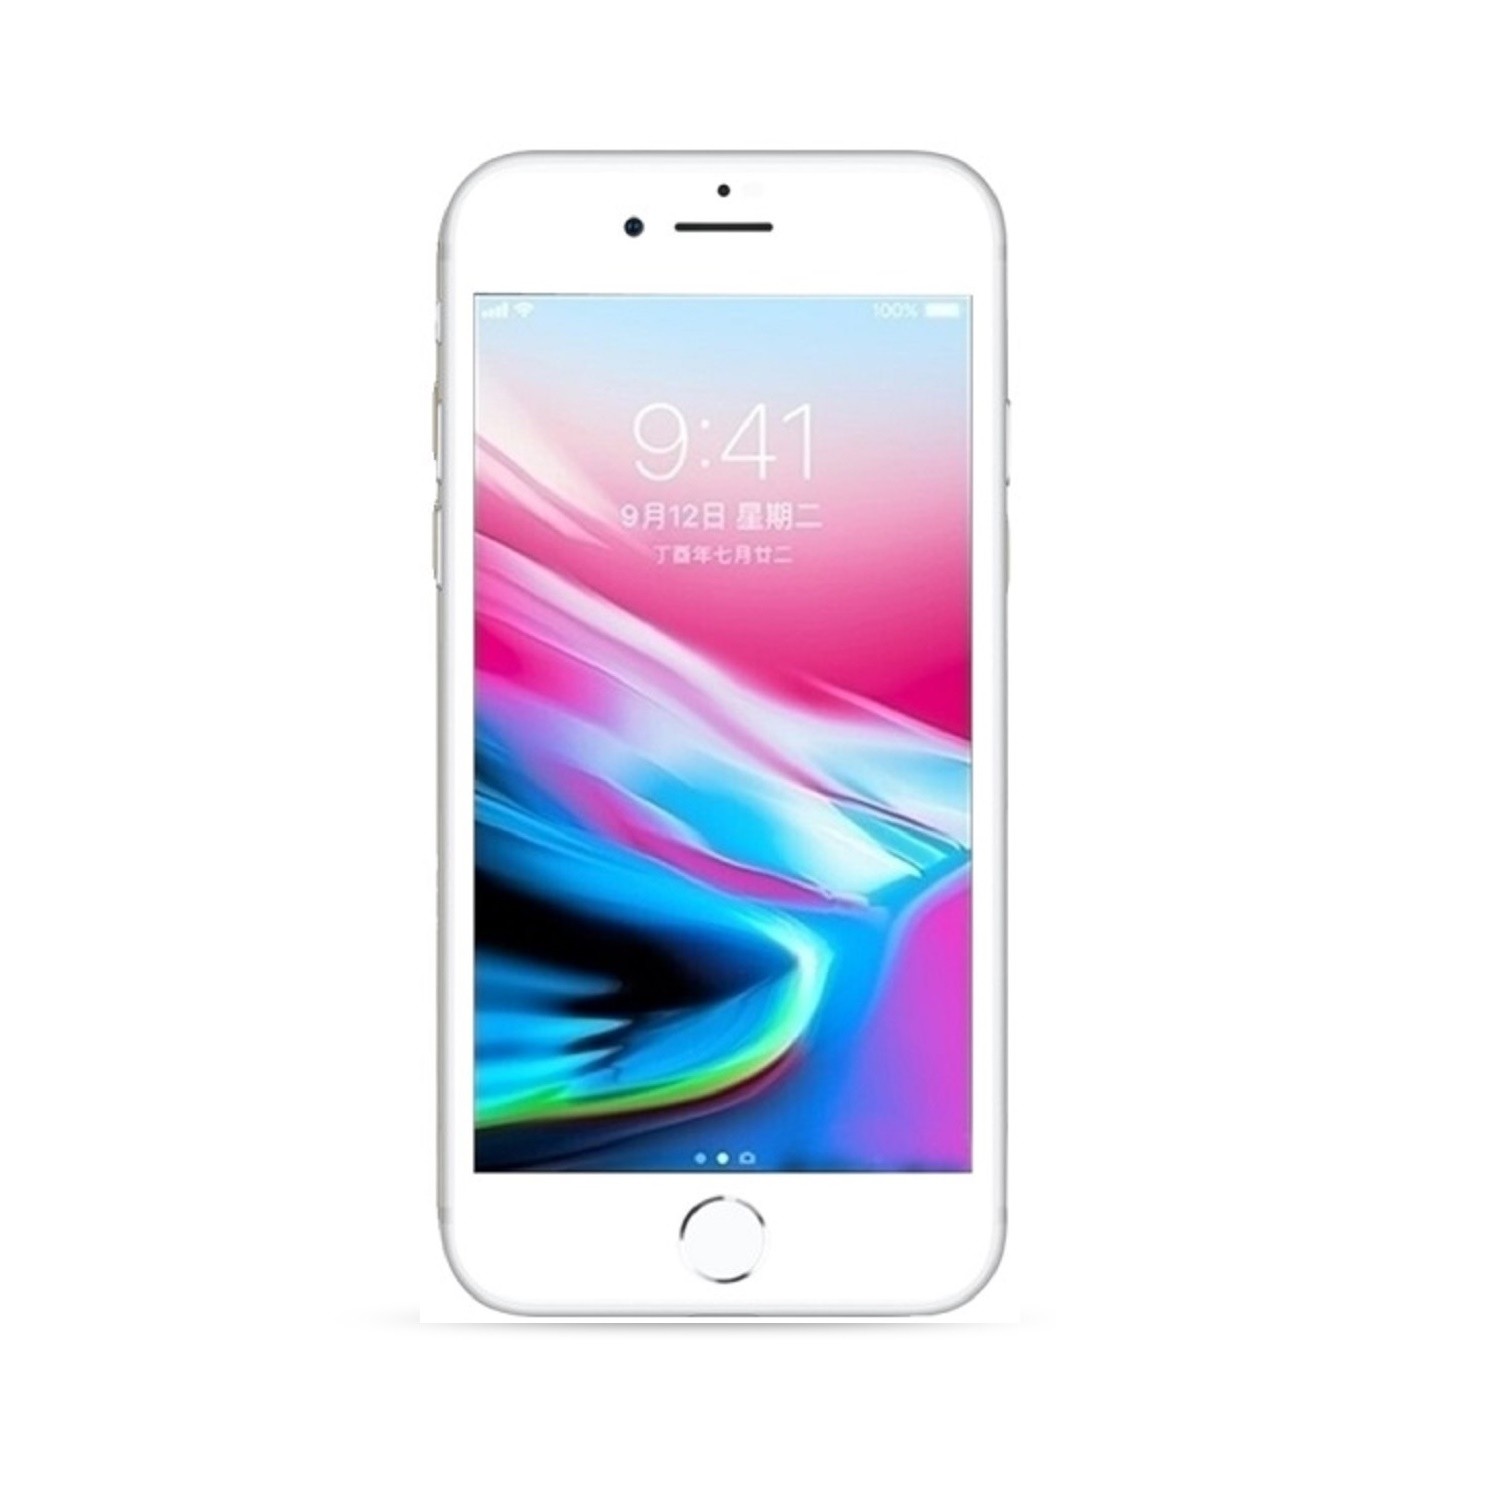 KLAR Apple Plus) FULL 8 9H Hartglas iPhone 2x Schutzglas PROTECTORKING Displayschutzfolie(für COVER HD